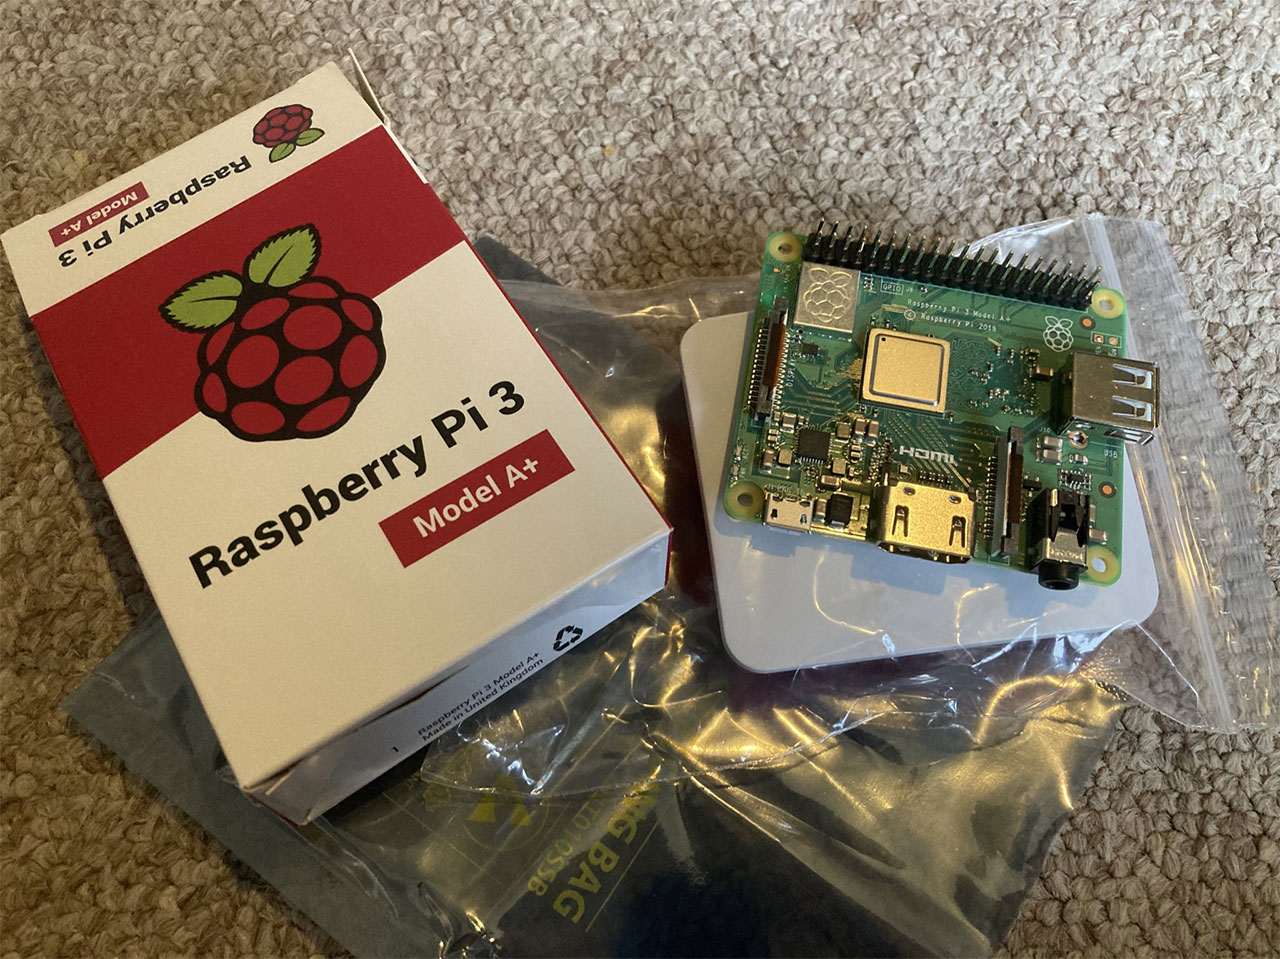 Raspberry Pi 3 - Model A+